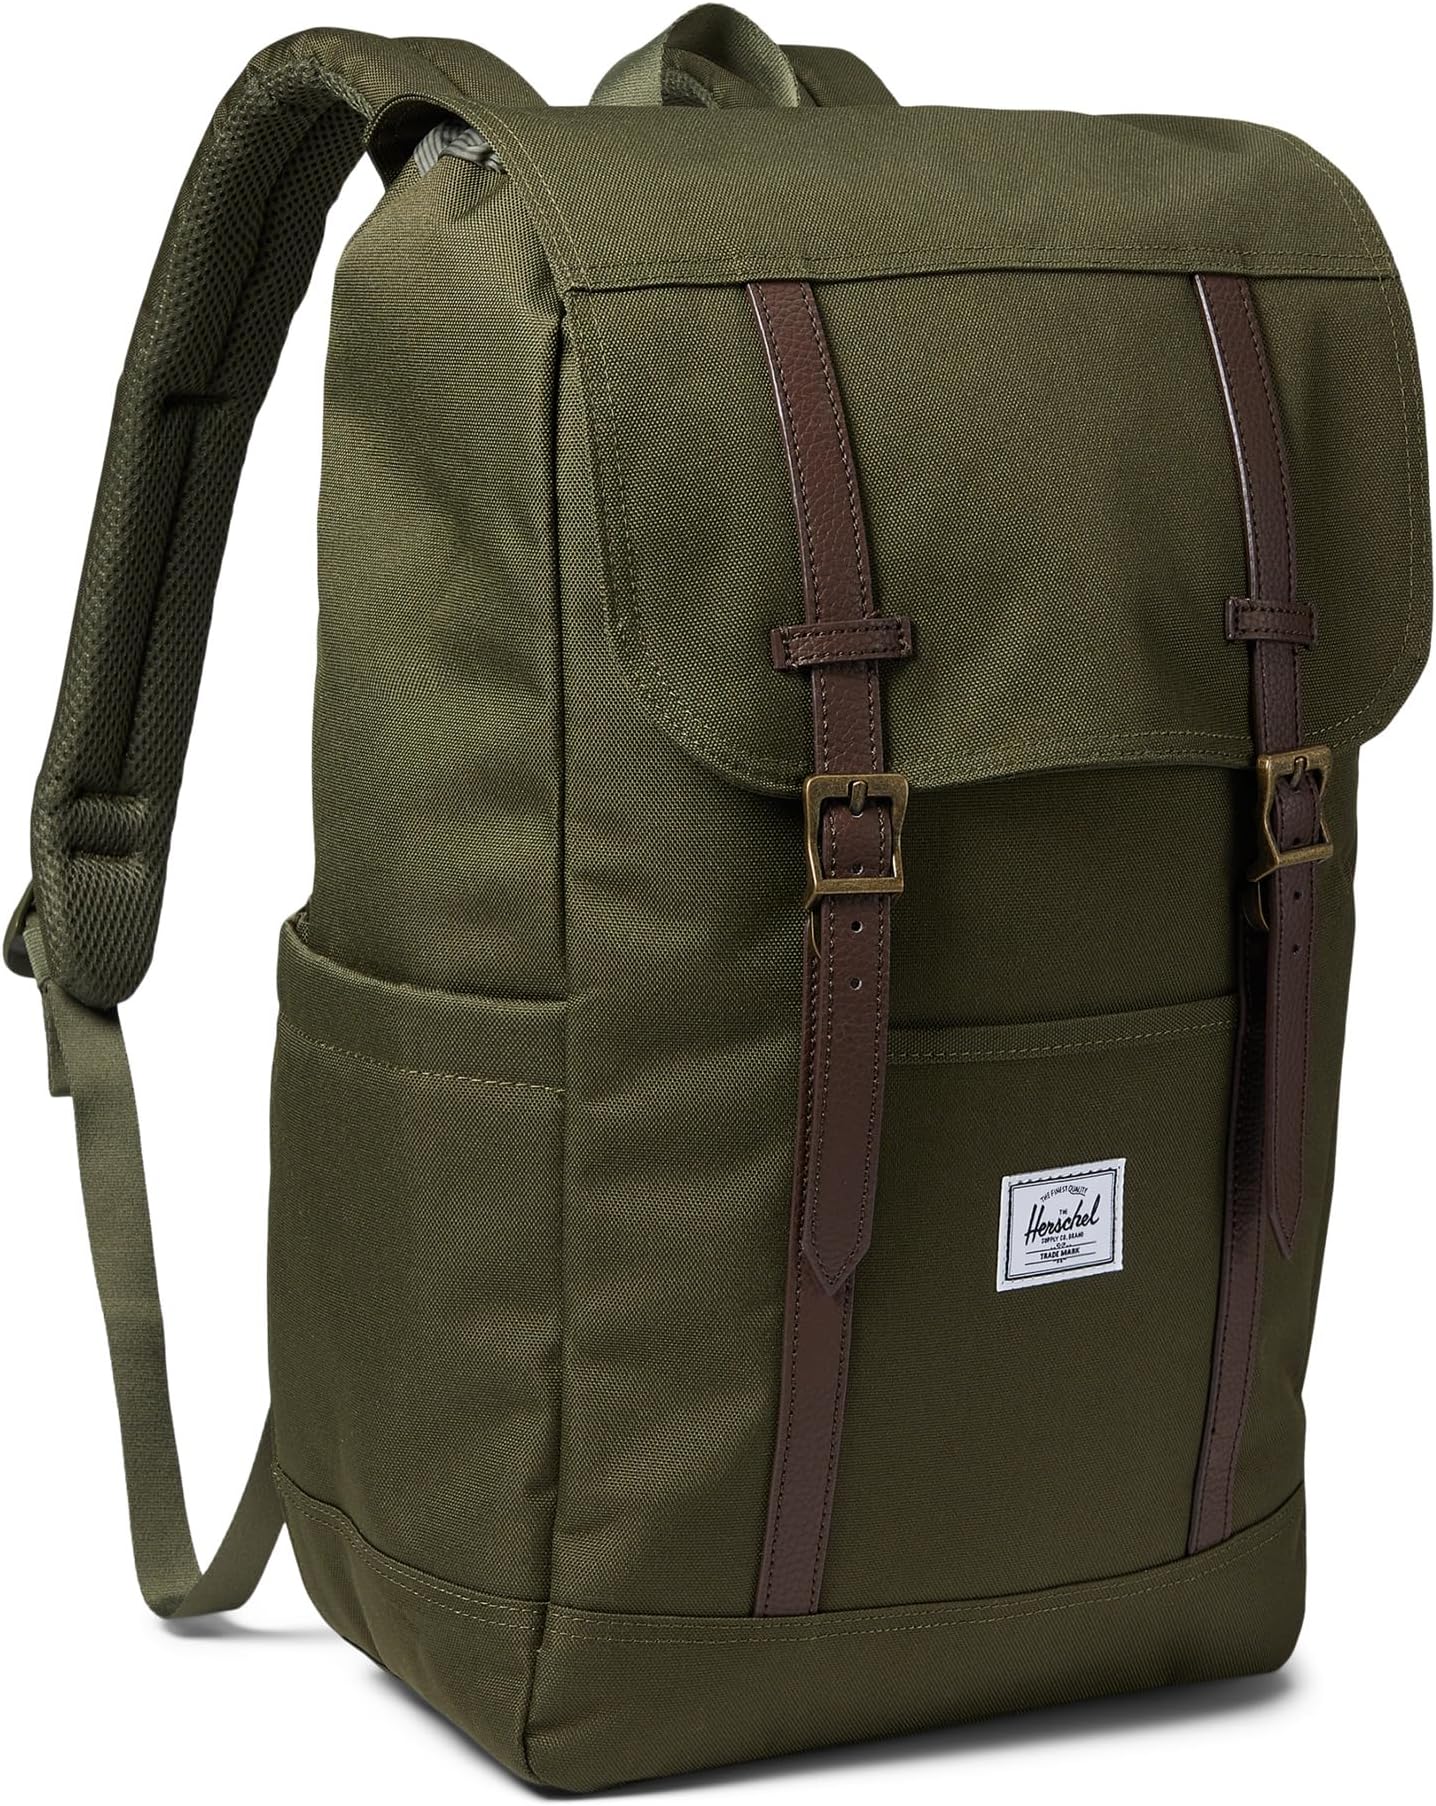 рюкзак heritage backpack herschel supply co цвет ivy green chicory coffee Рюкзак Retreat Backpack Herschel Supply Co., цвет Ivy Green